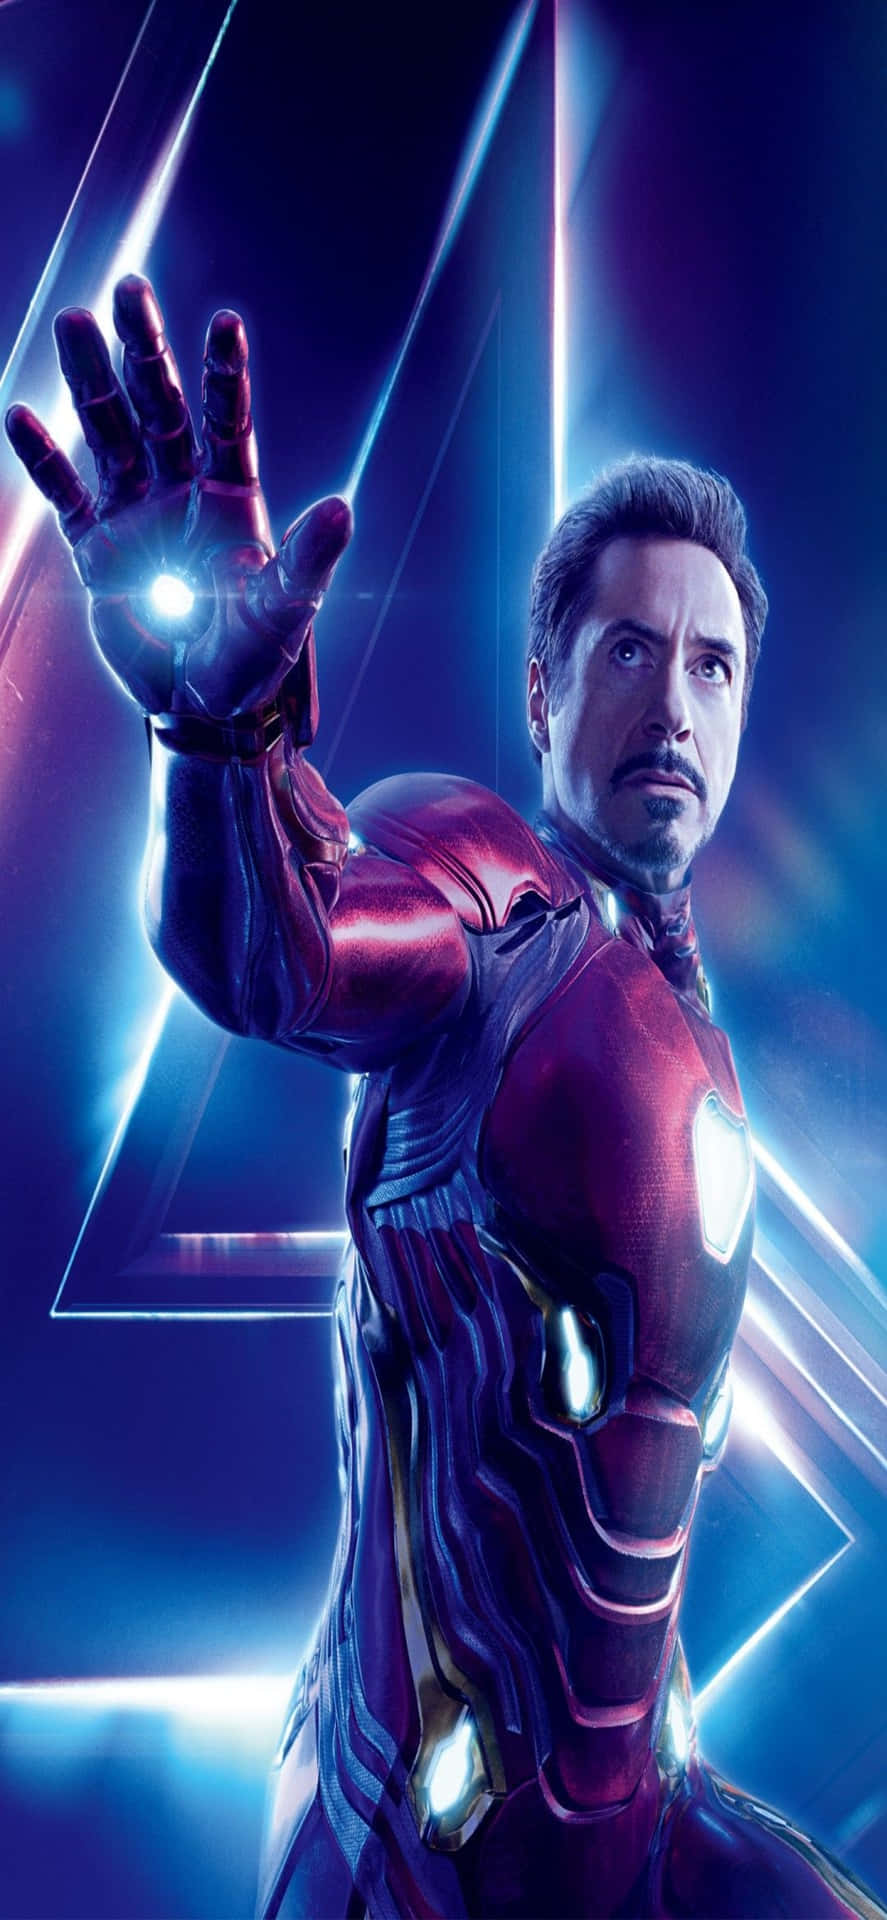 Iphonex Bakgrundsbild Från Iron Man Infinity War-postern.